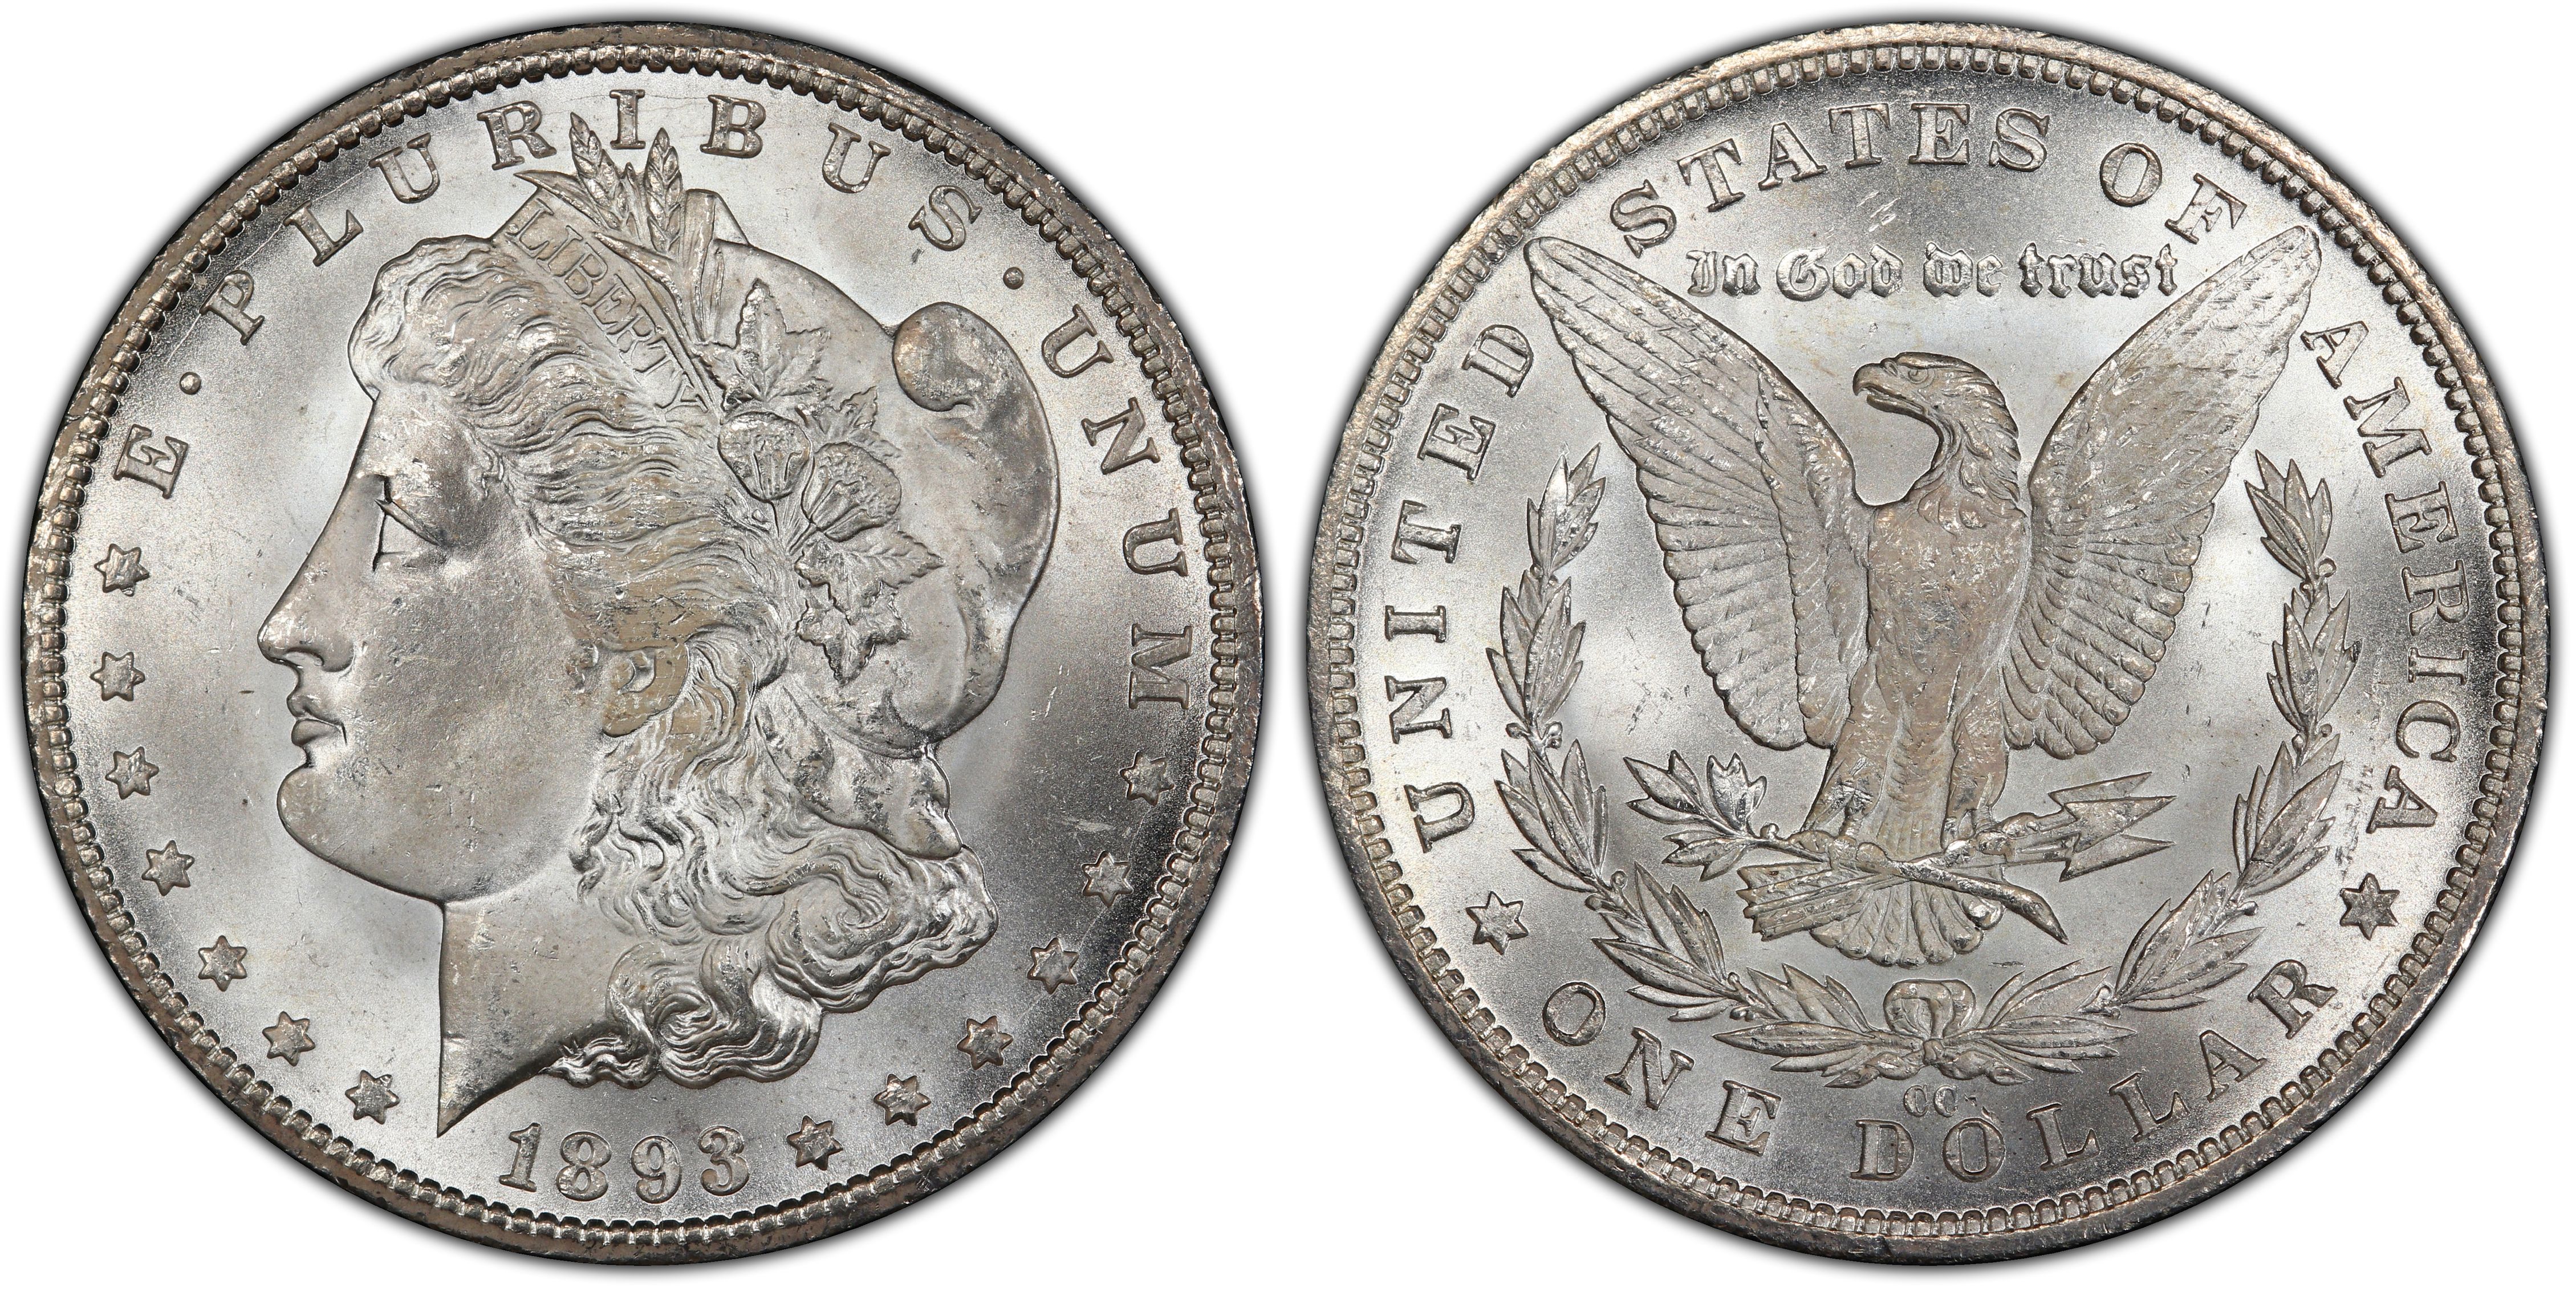 1893-CC $1 (Regular Strike) Morgan Dollar - PCGS CoinFacts